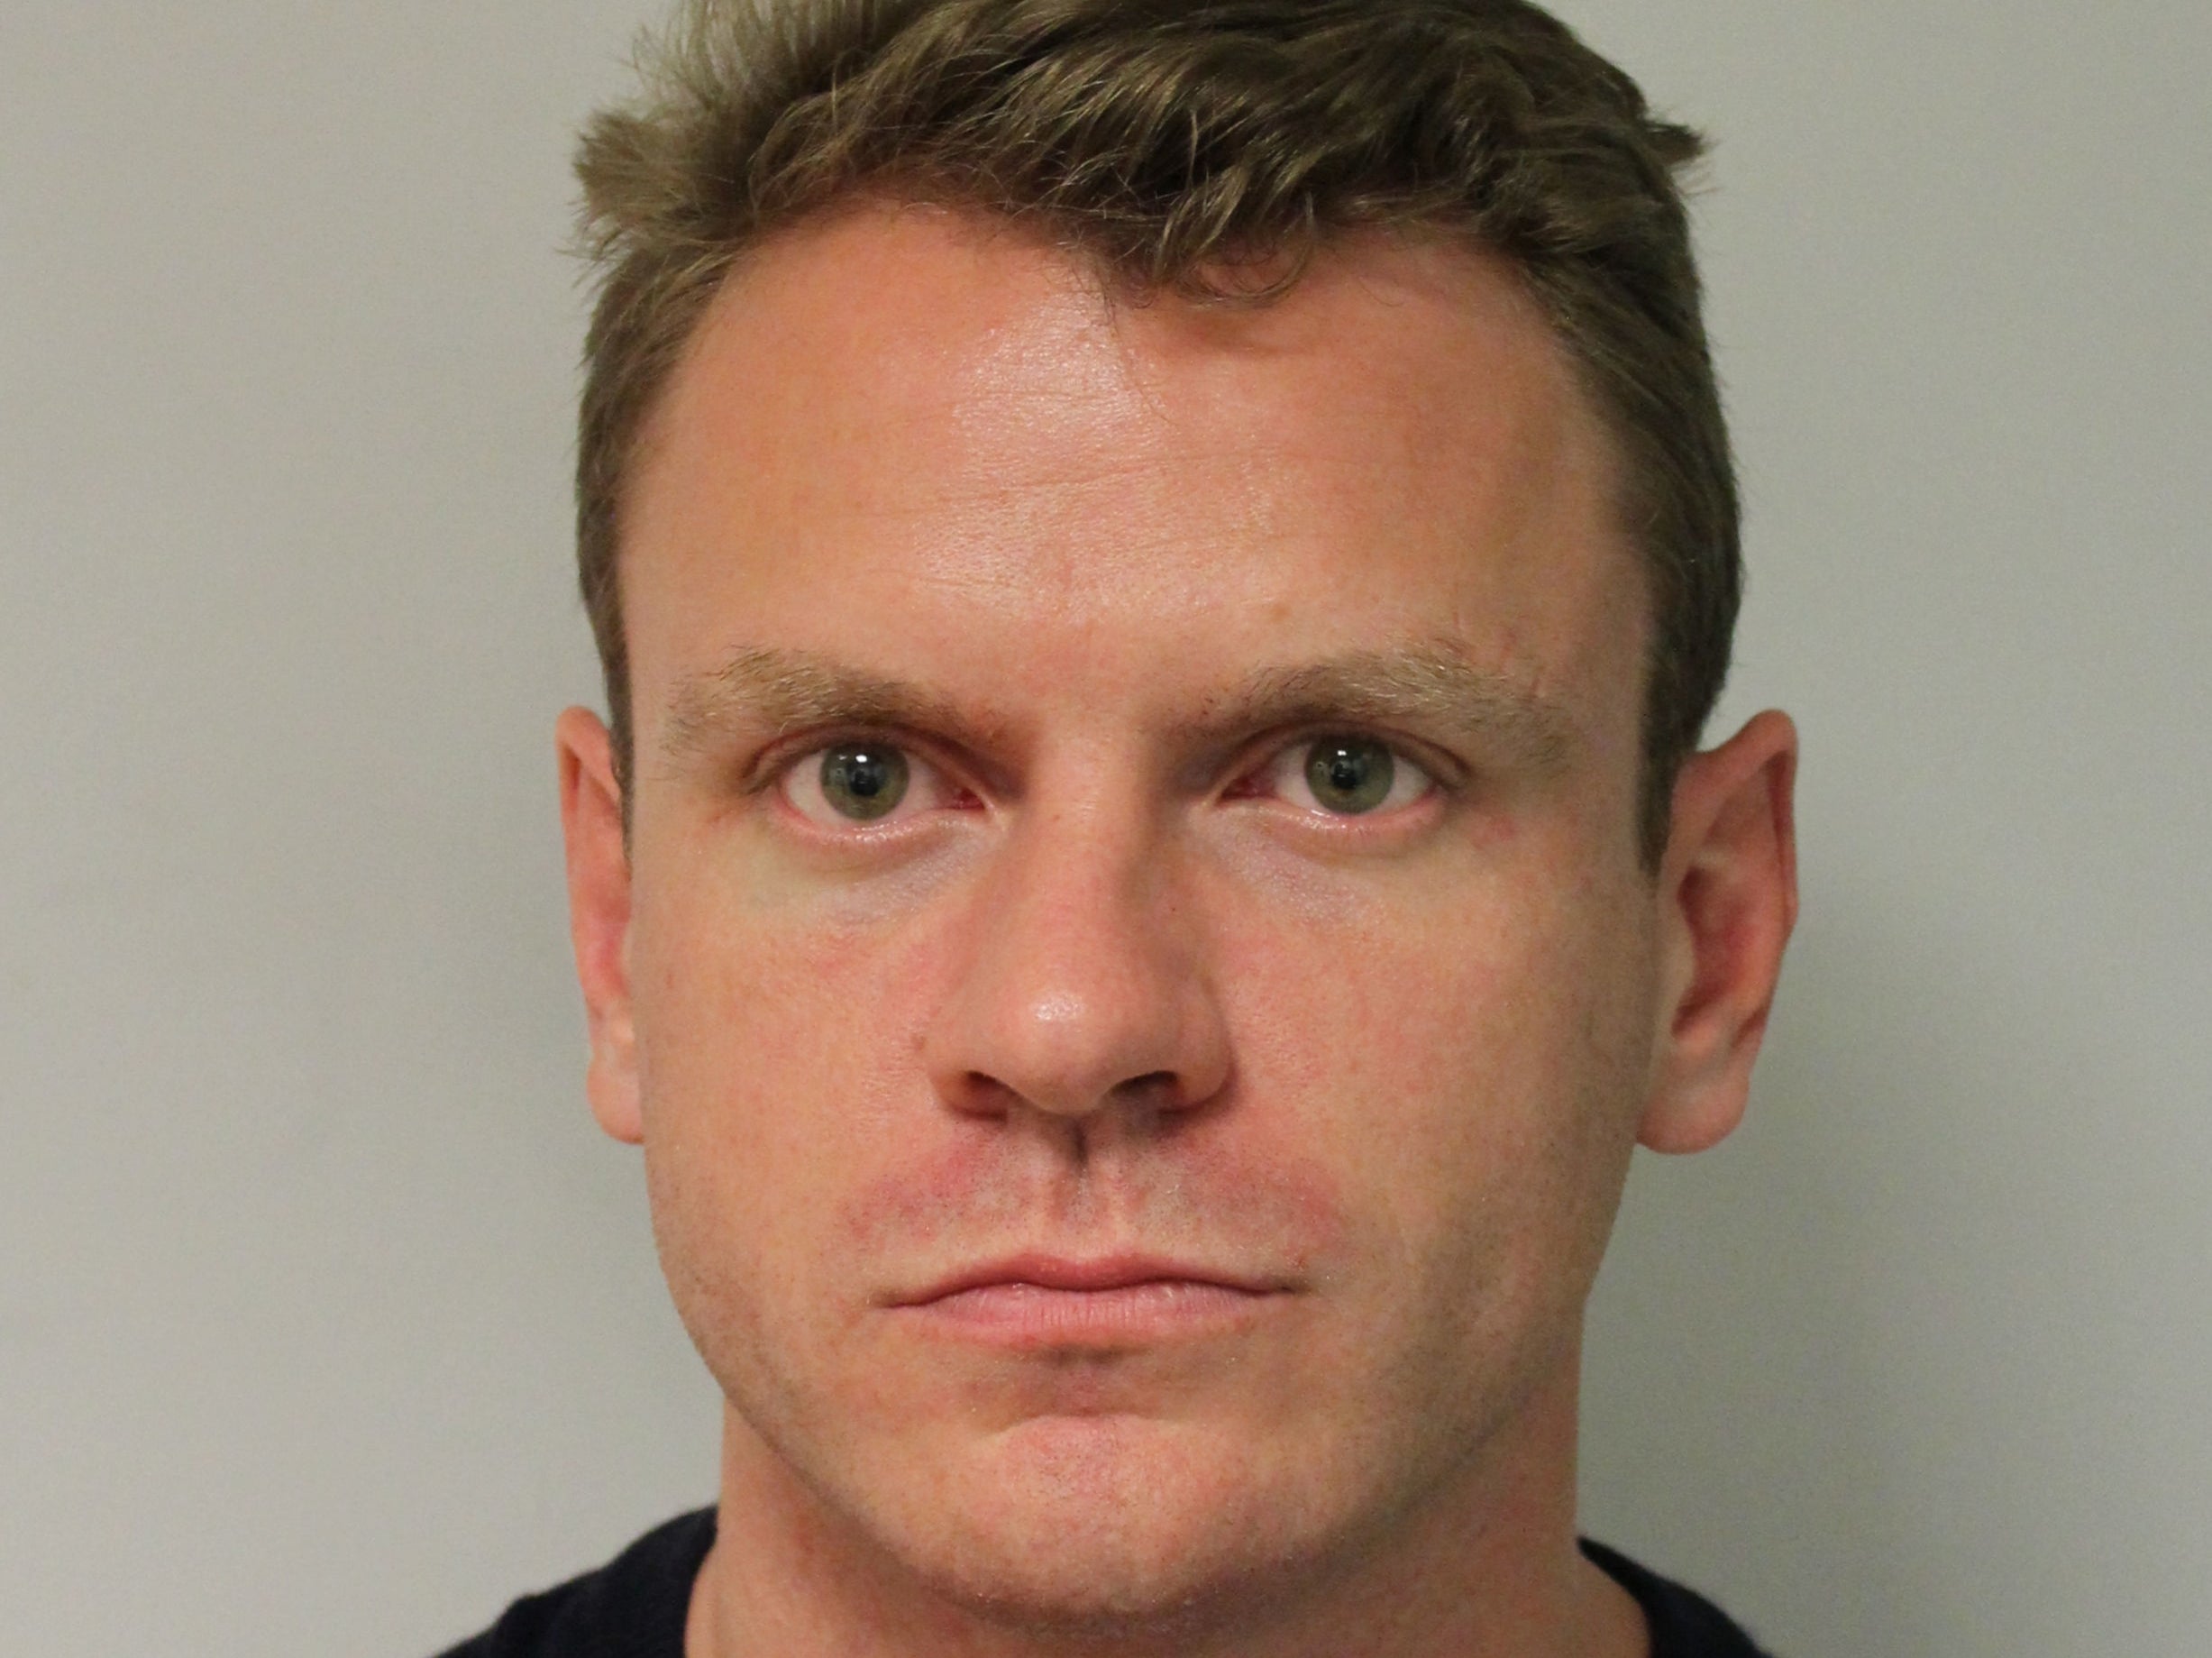 Custody photo of Paul Ritchie released by Metropolitan Police